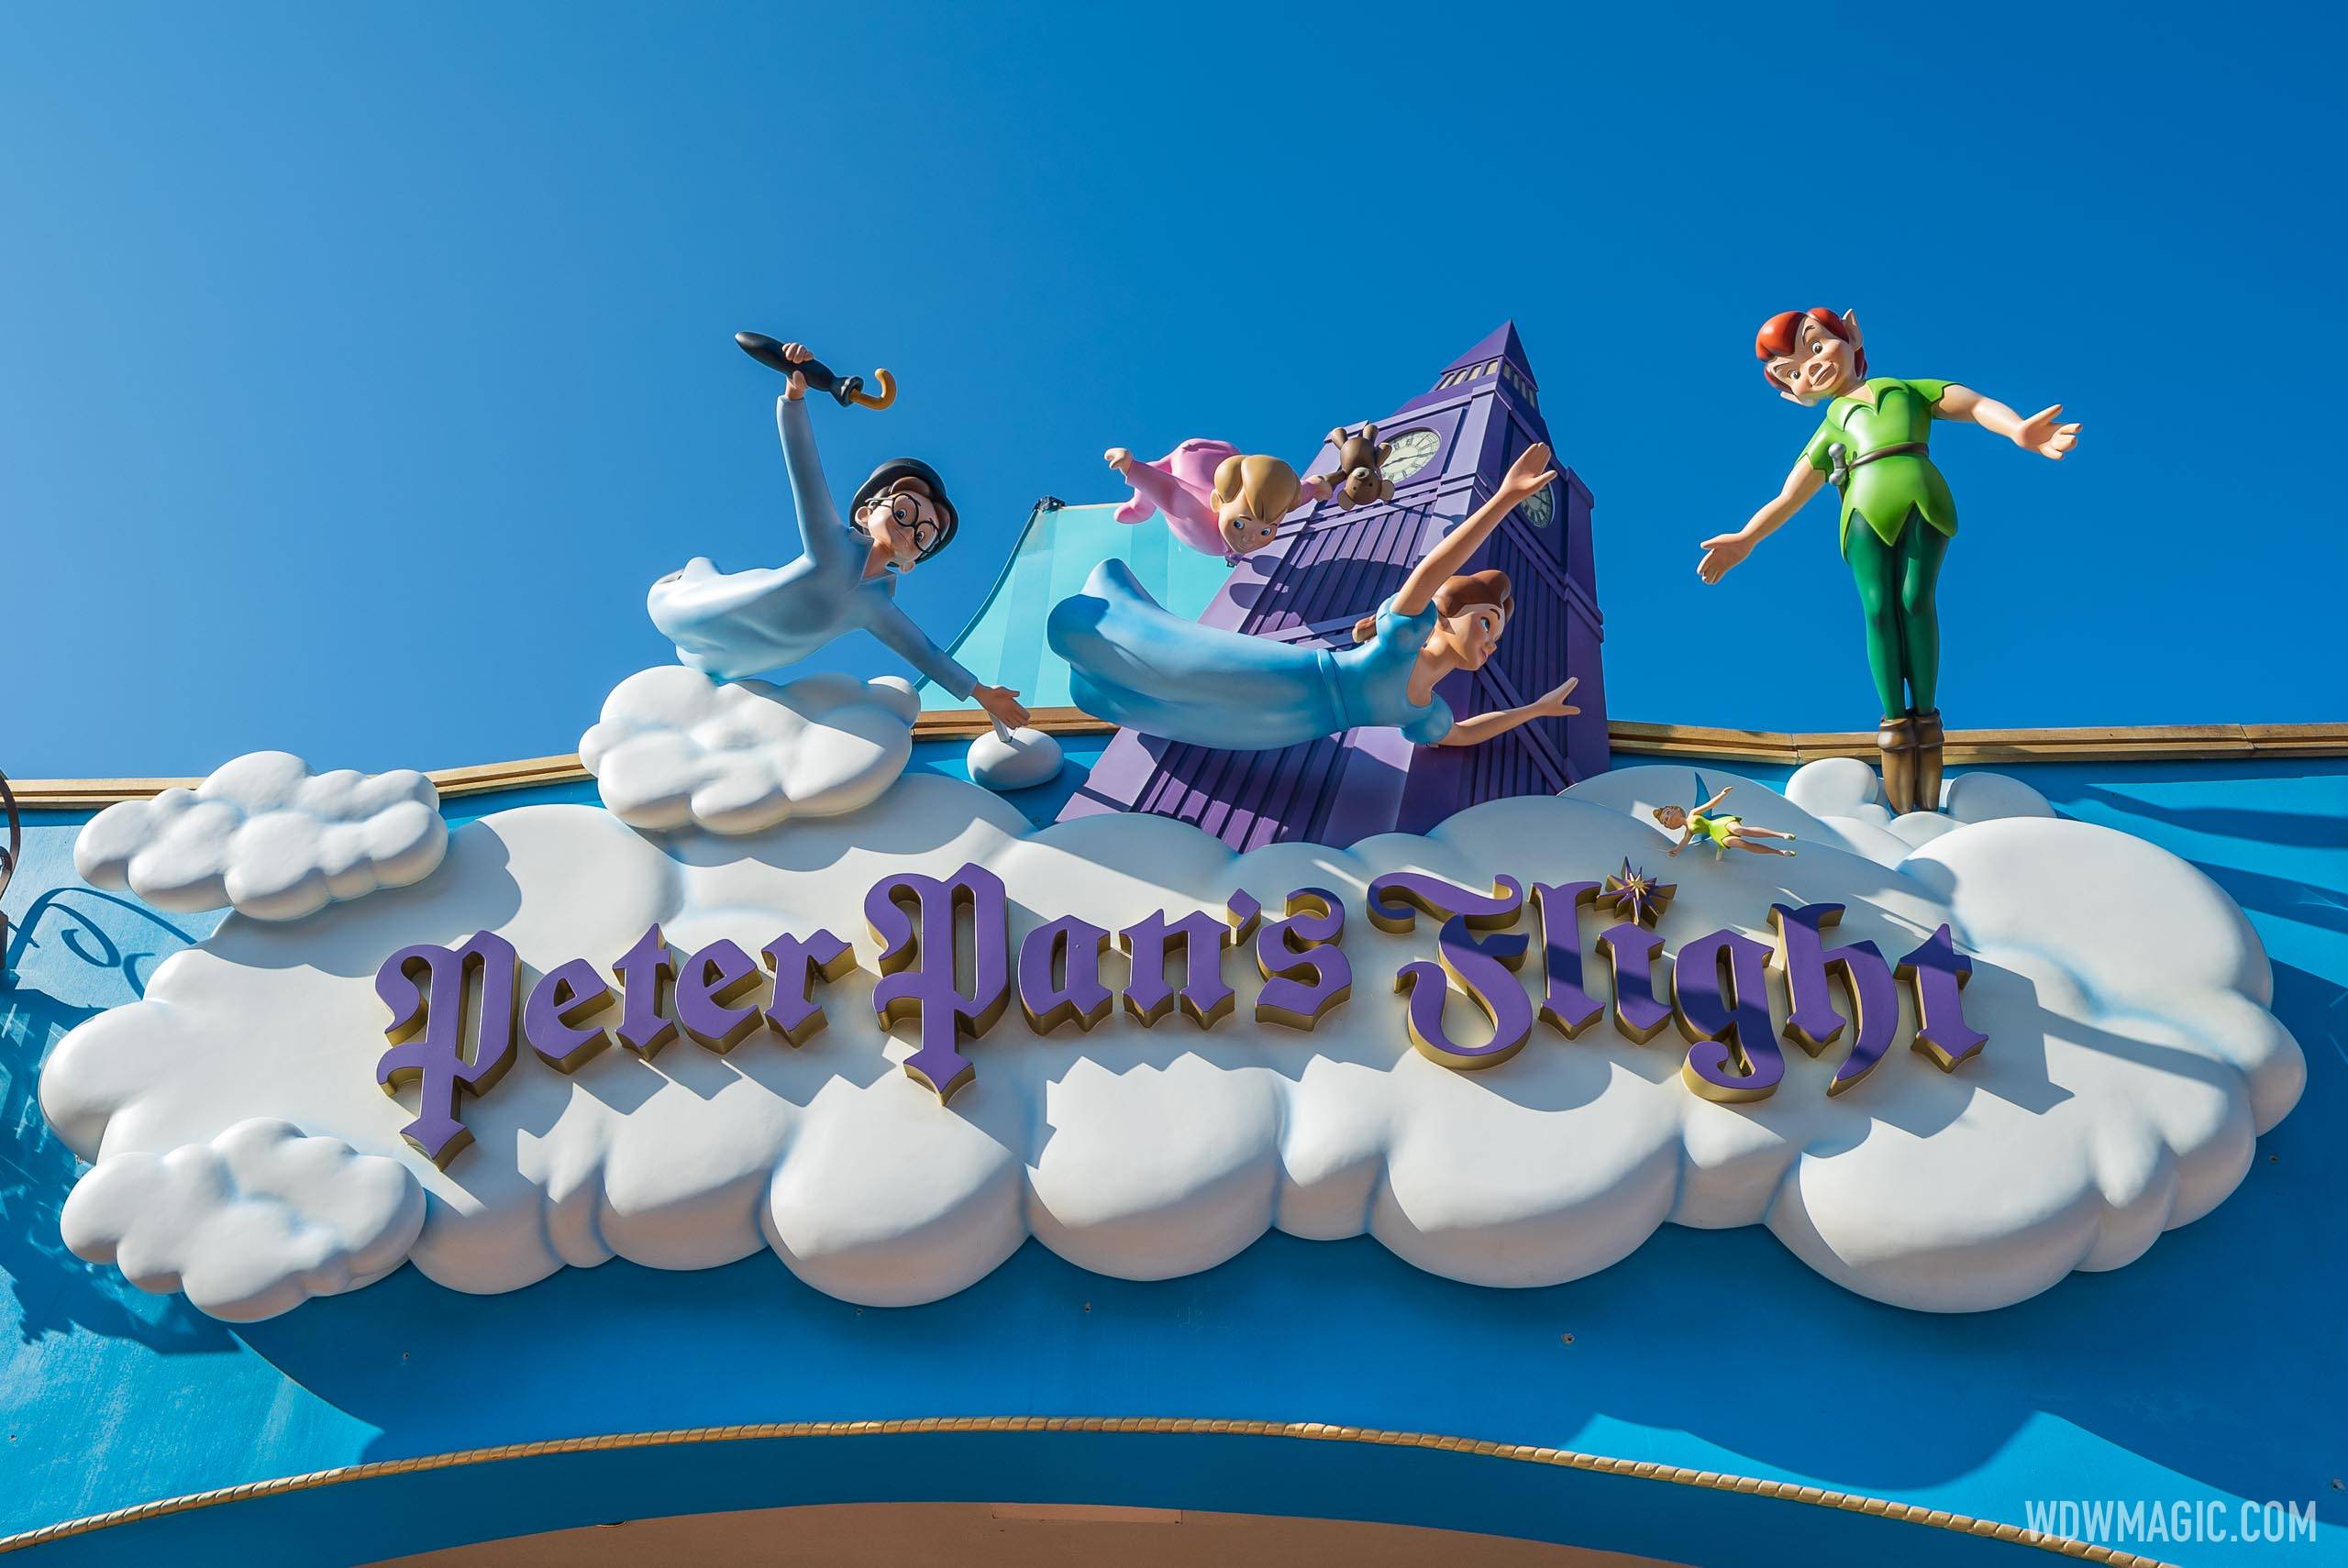 Peter Pan's Flight